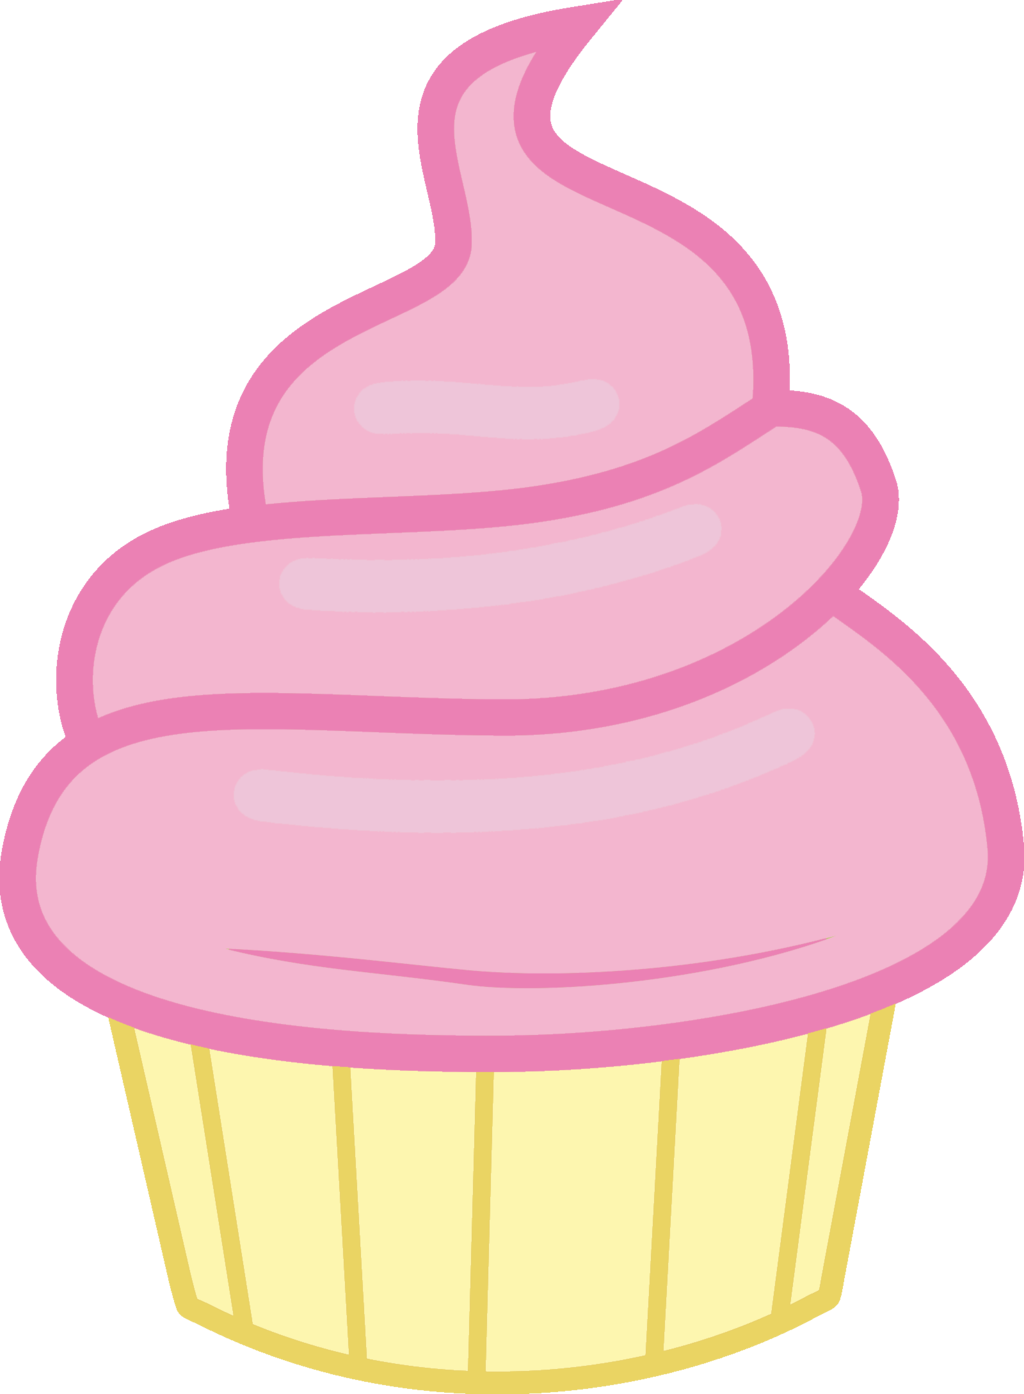 Fluttershy Cupcake By Magicdog93 Fluttershy Cupcake - Transparent Background Cupcake Clip Art (1024x1394)